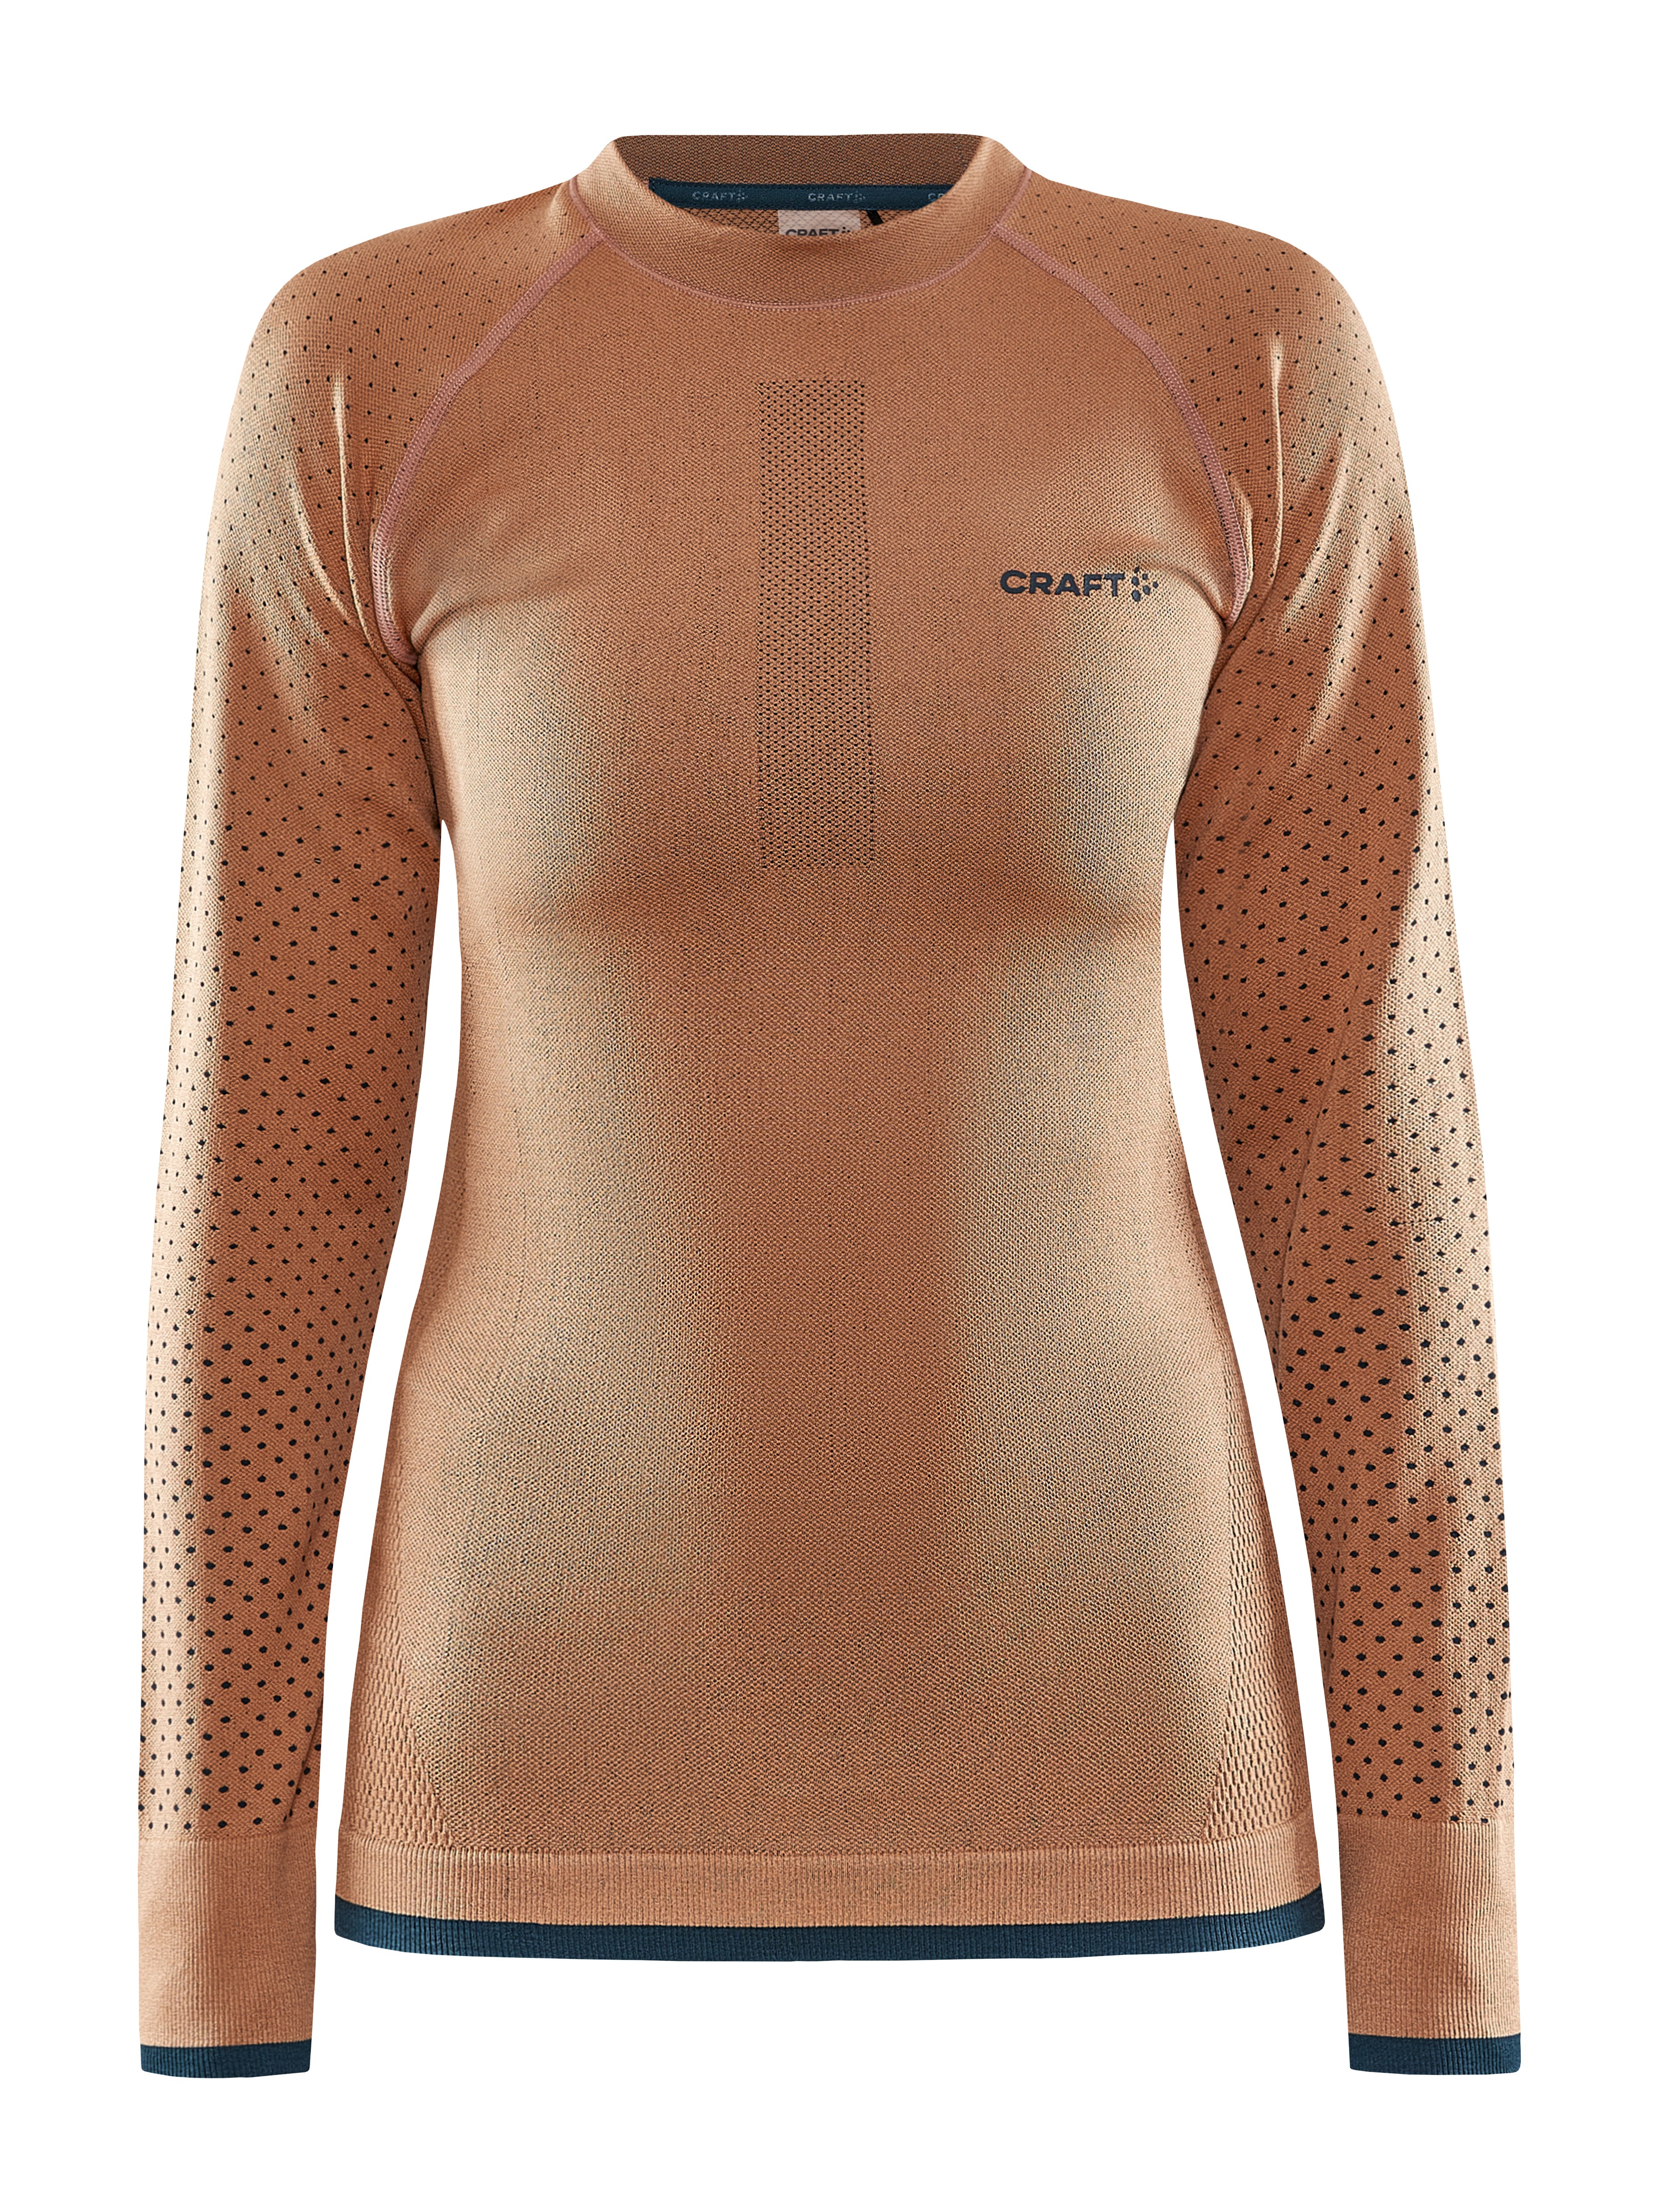 LS Craft | Intensity - Orange ADV Warm W Sportswear